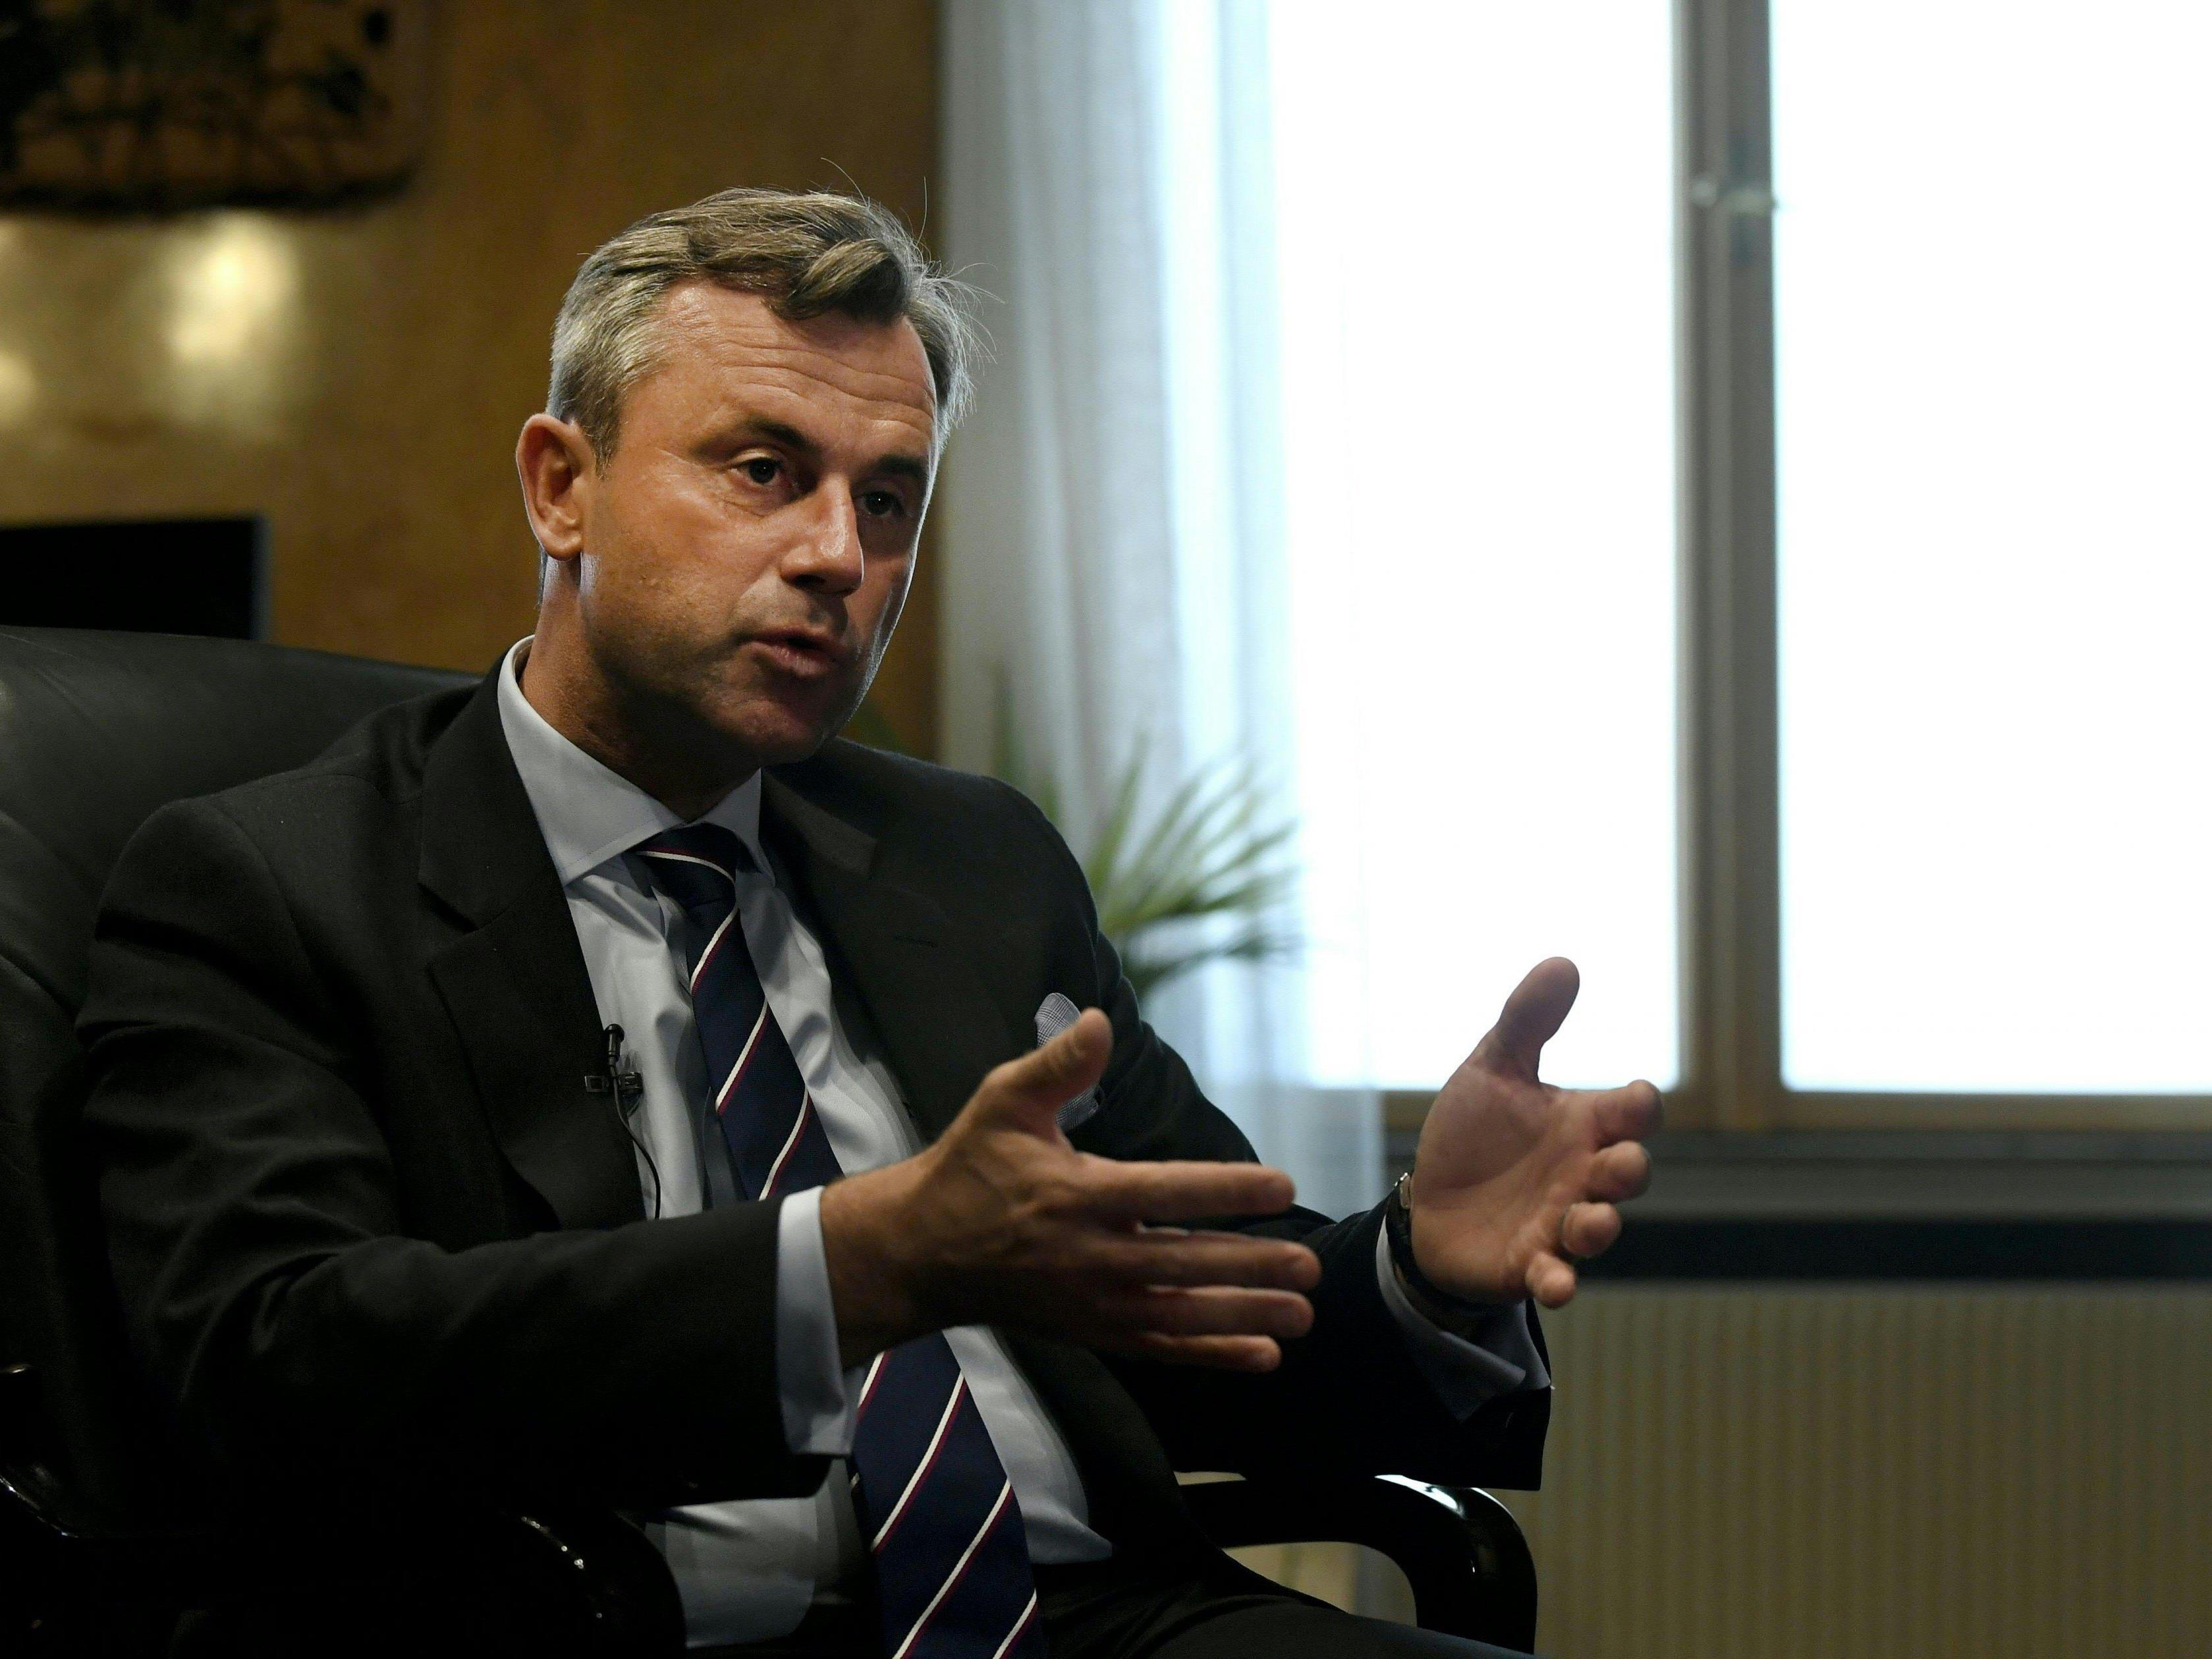 Der Präsidentschaftskandidat Norbert Hofer (FPÖ) beim Interview